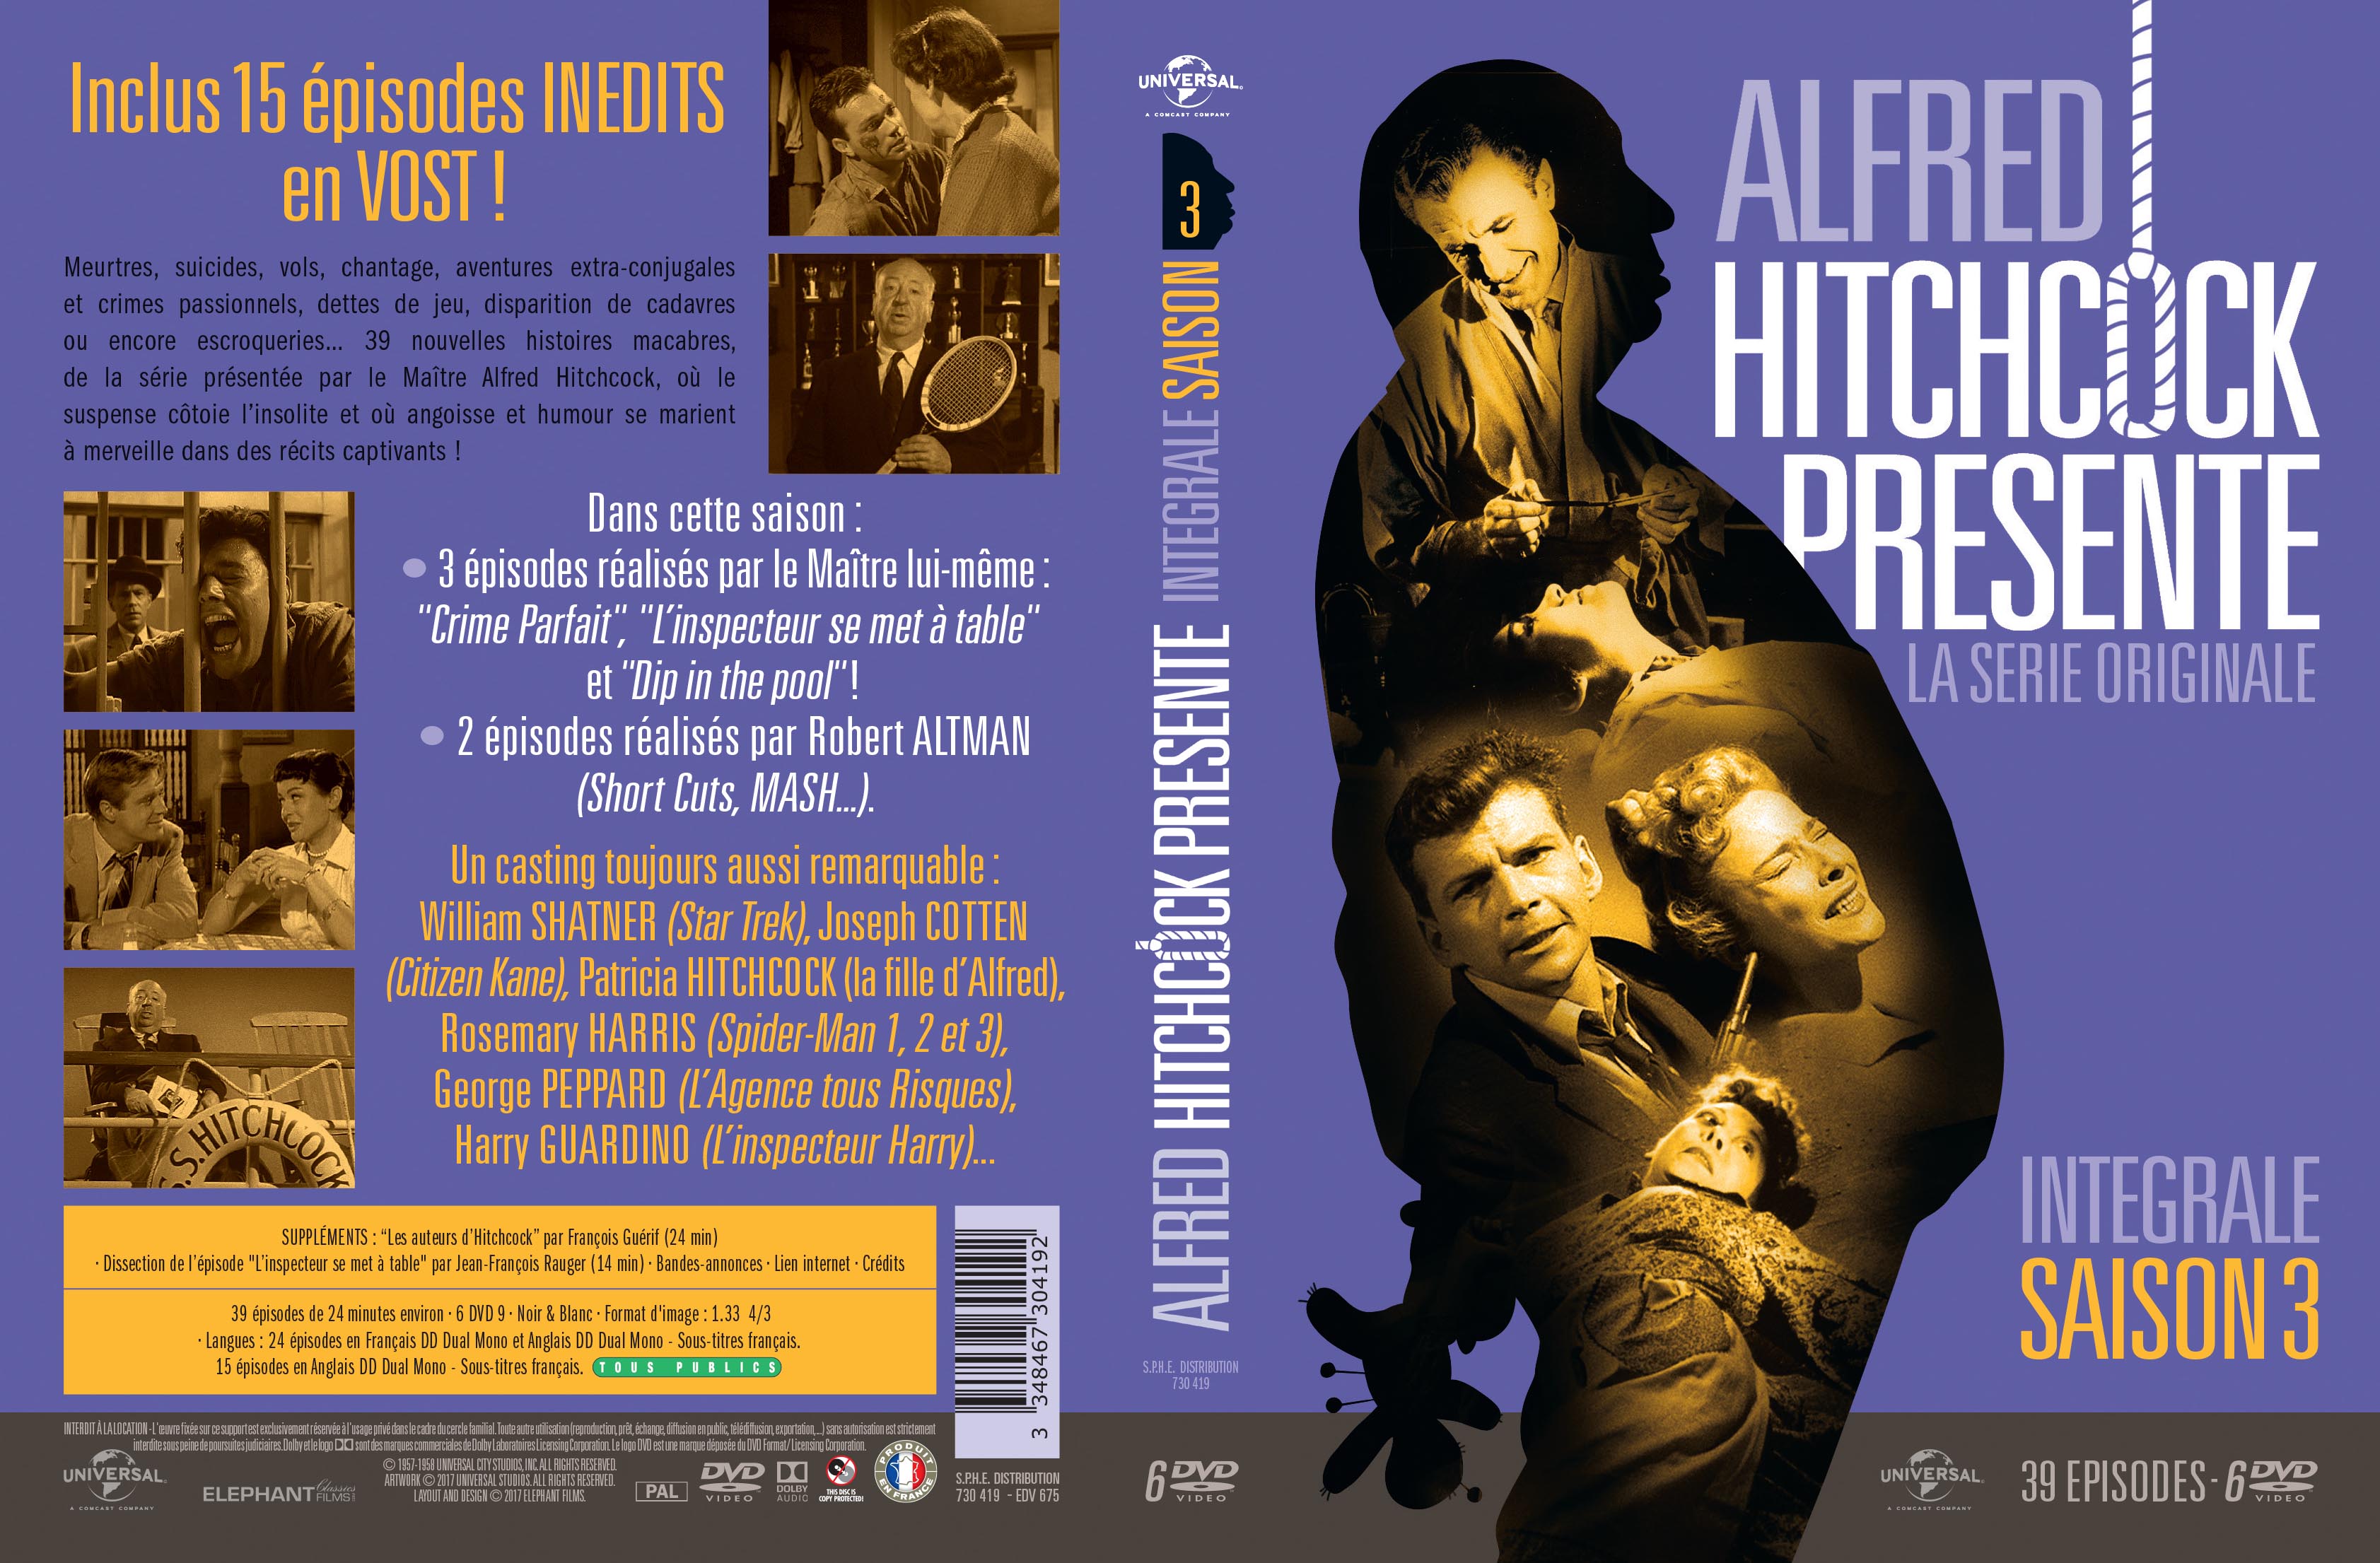 Jaquette DVD Alfred Hitchcock prsente Saison 3